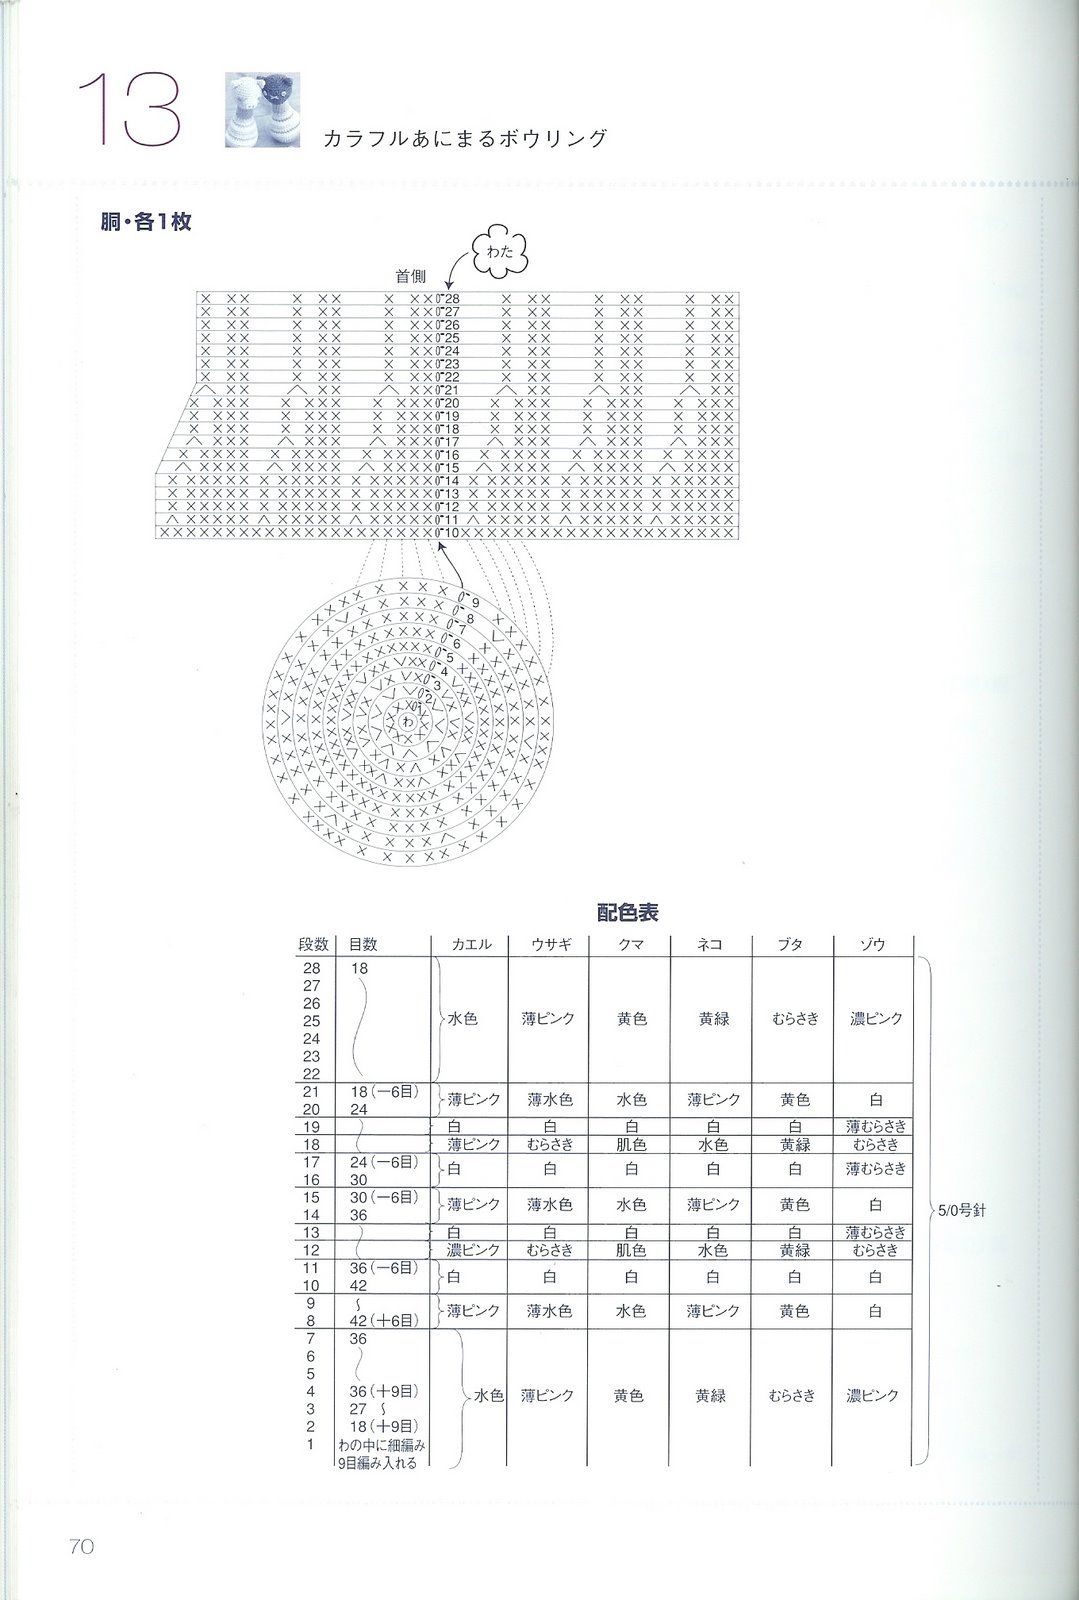 Checkers with animals amigurumi pattern 1 (4)